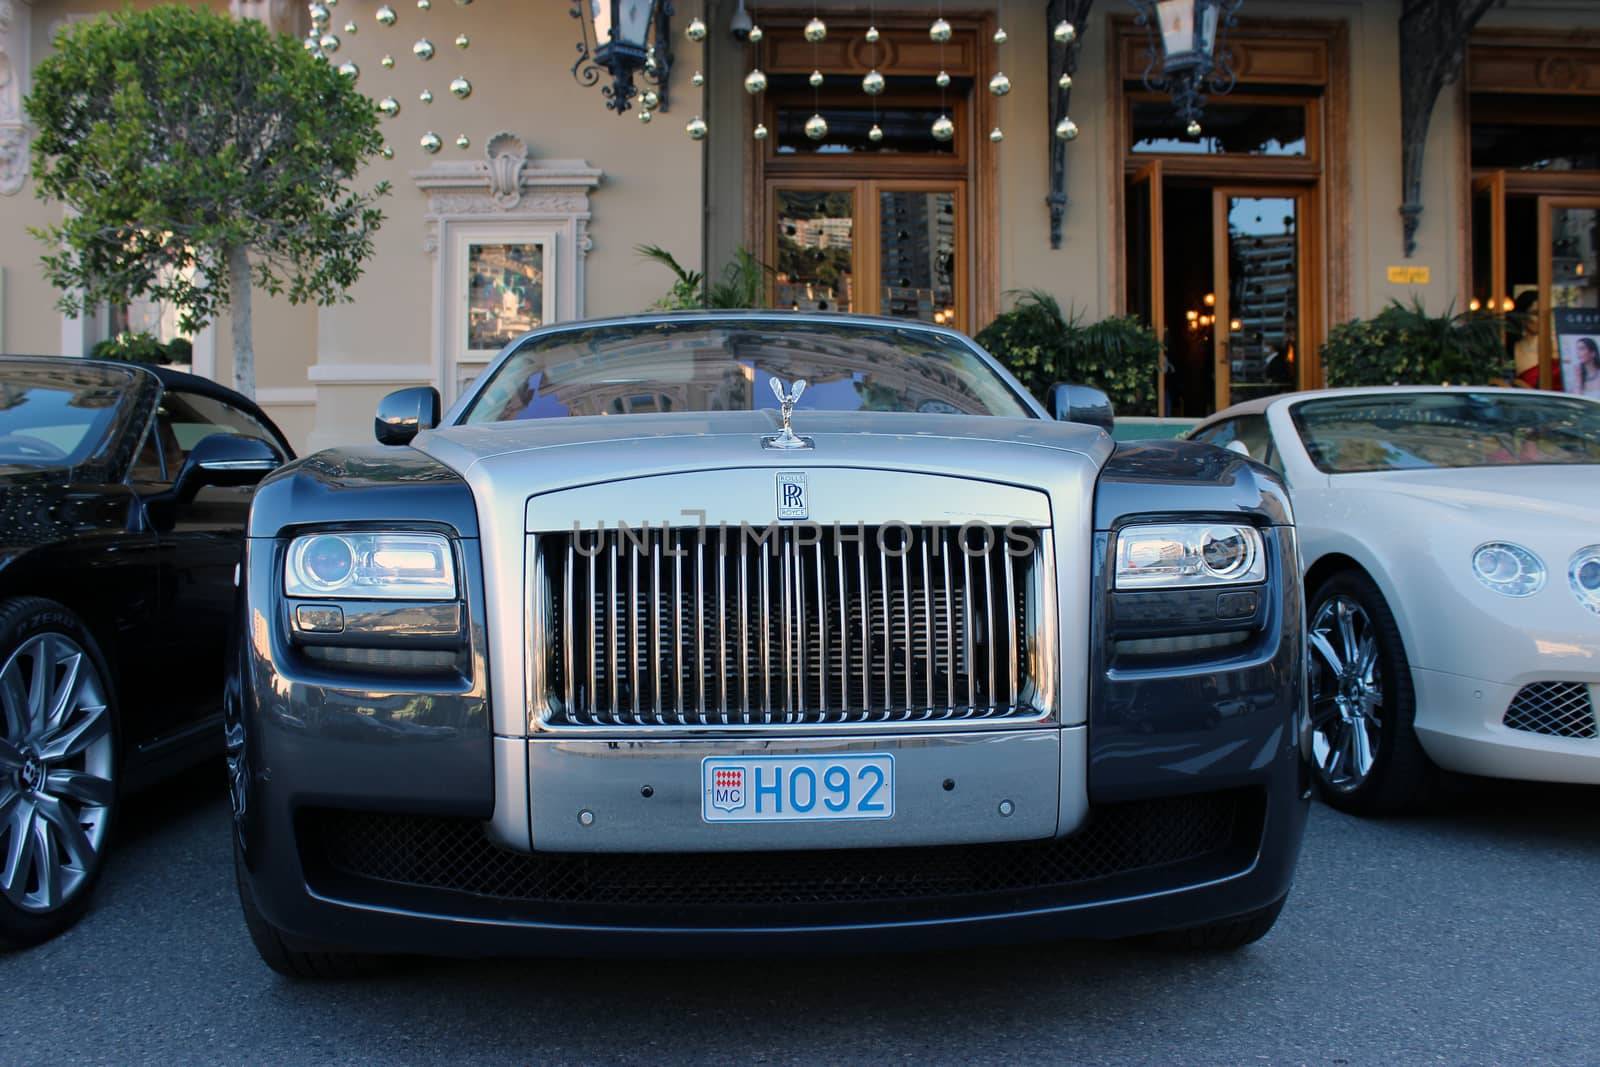 Luxury Rolls Royce Phantom Parked in Front of the Casino by bensib